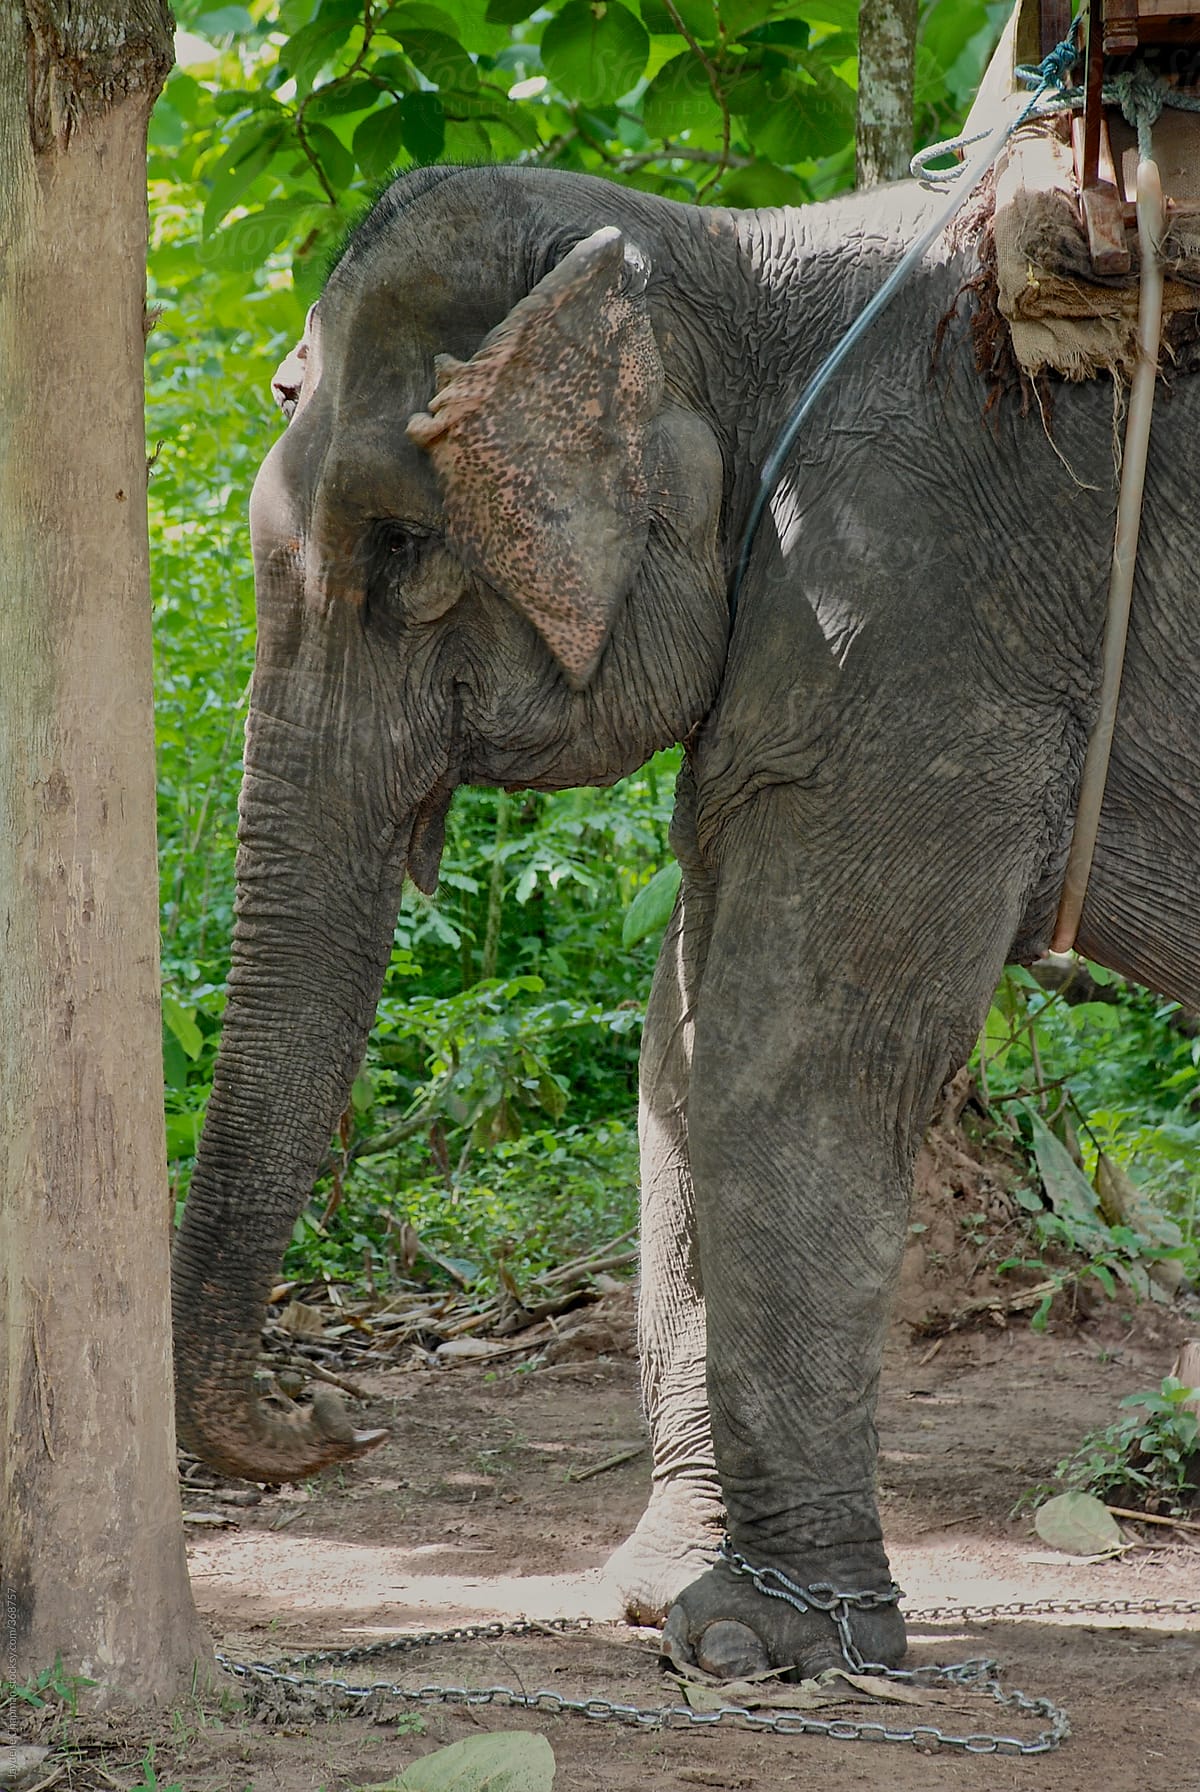 Elephants in captivity, southeast Asia